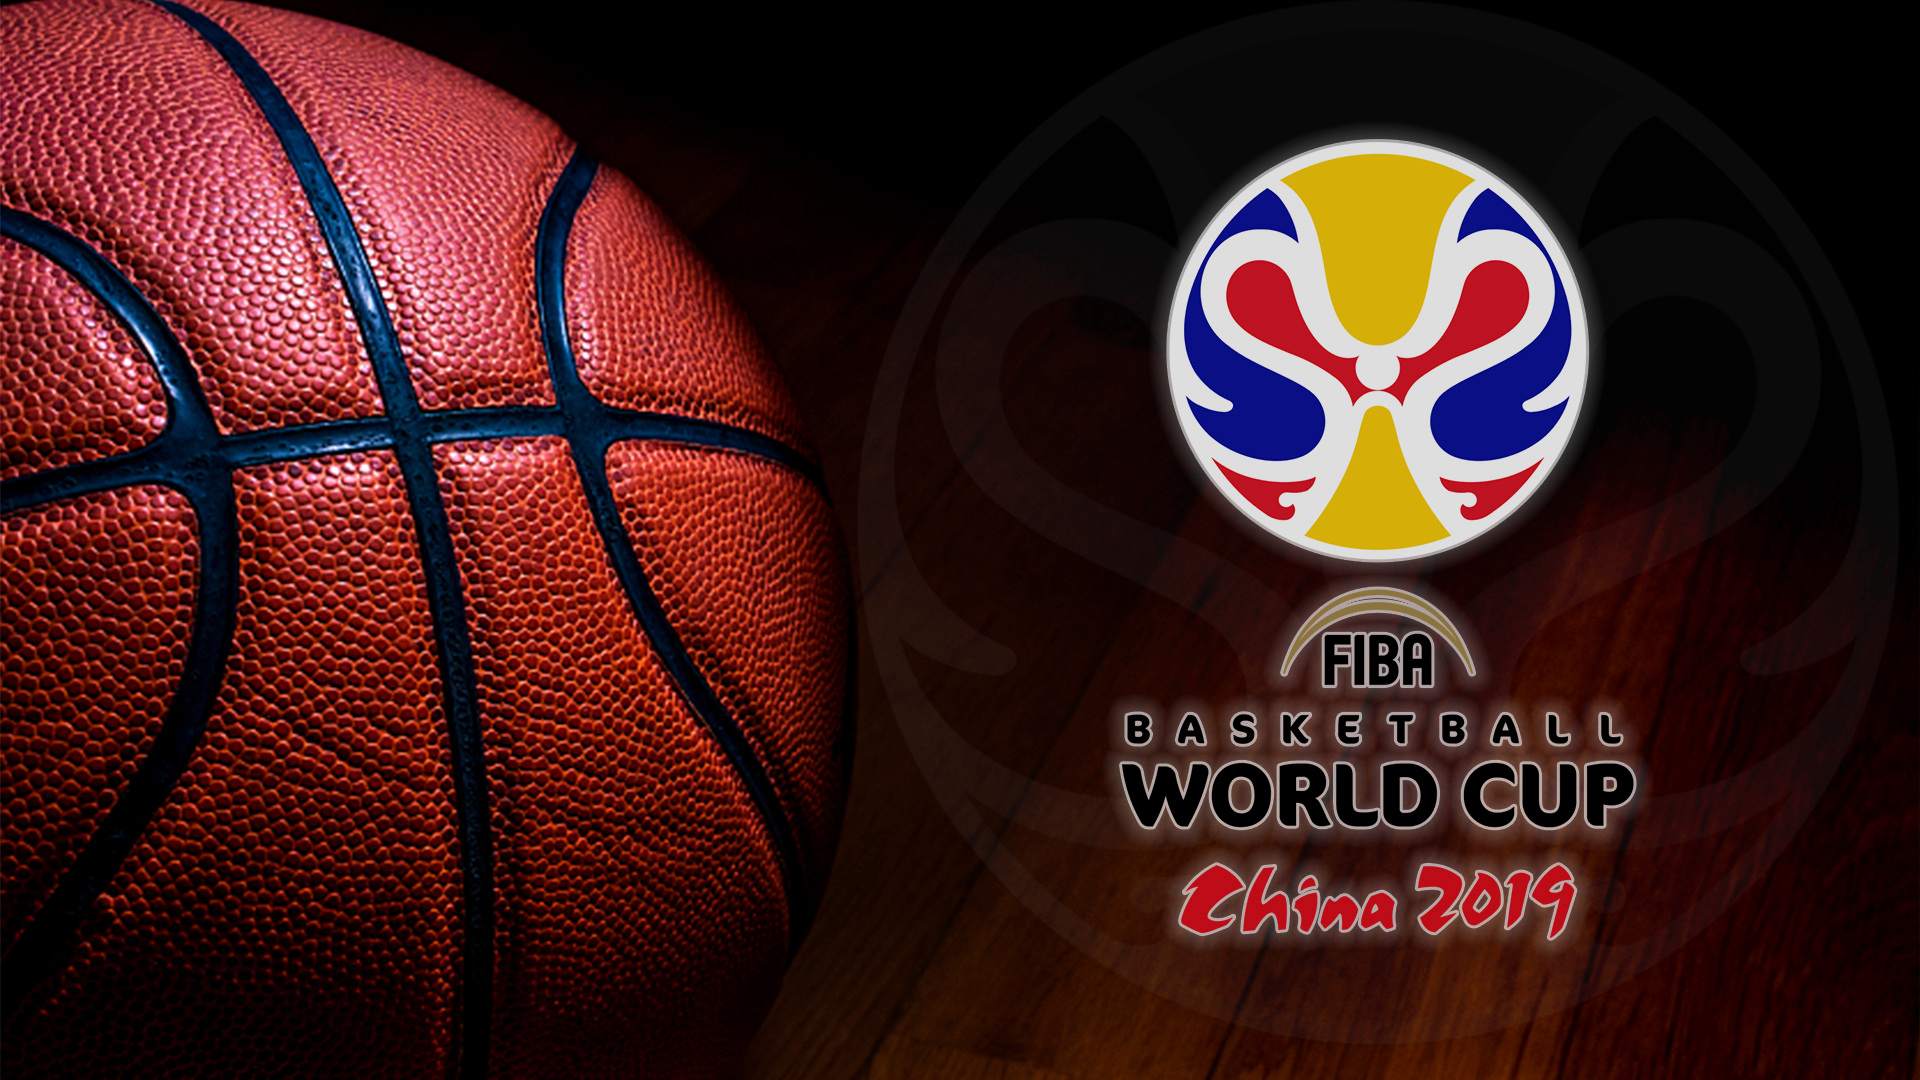 China in a good group at 2019 FIBA Basketball World Cup